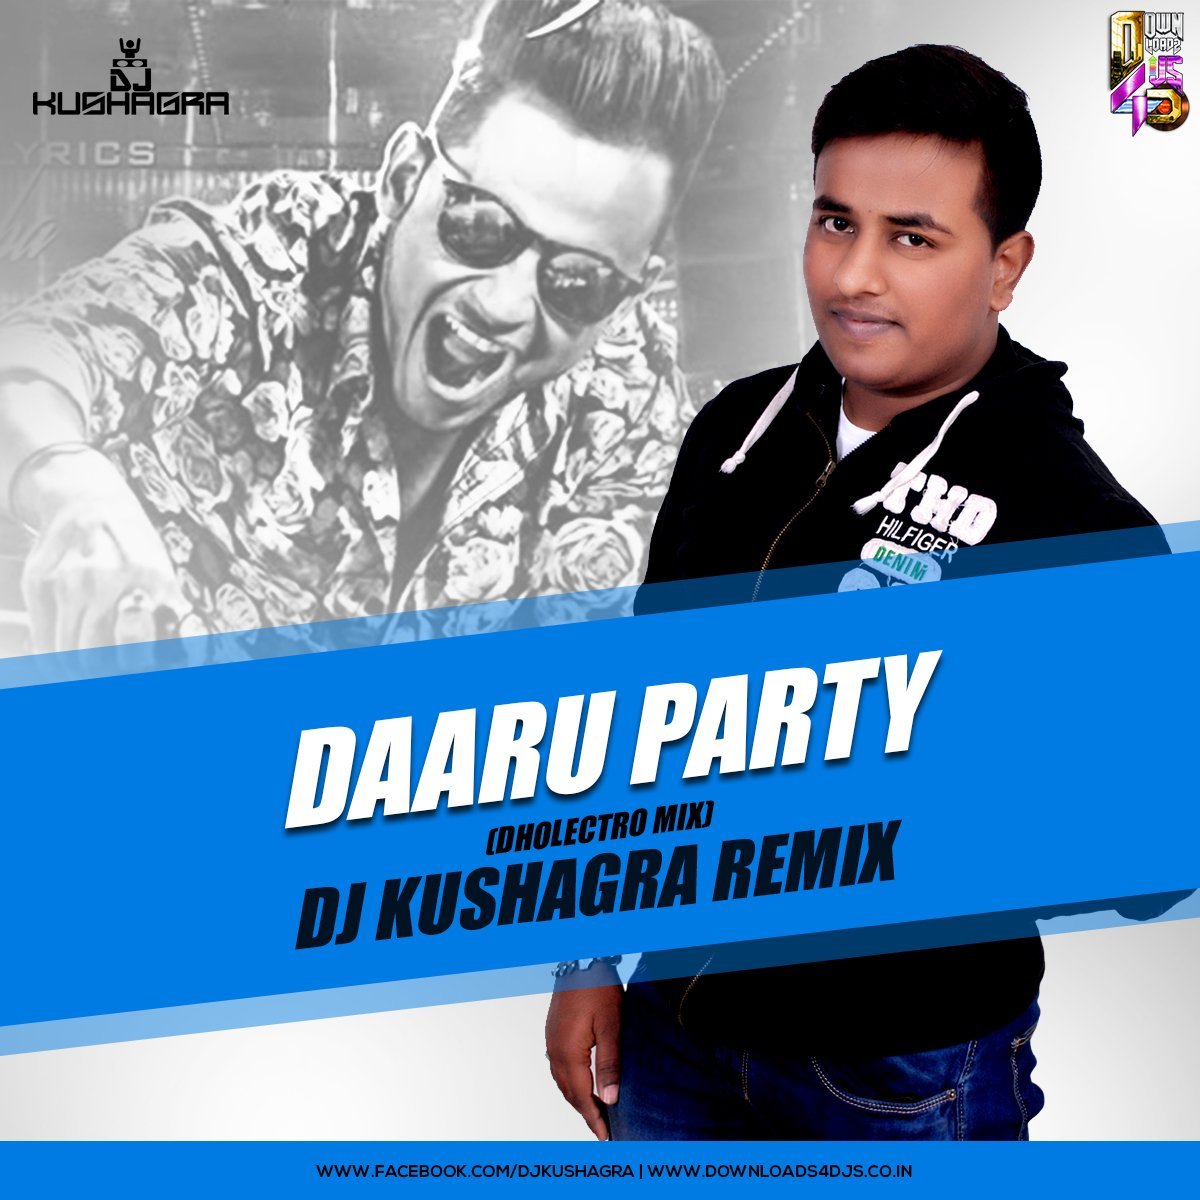 DJ Kushagra Profile Pic